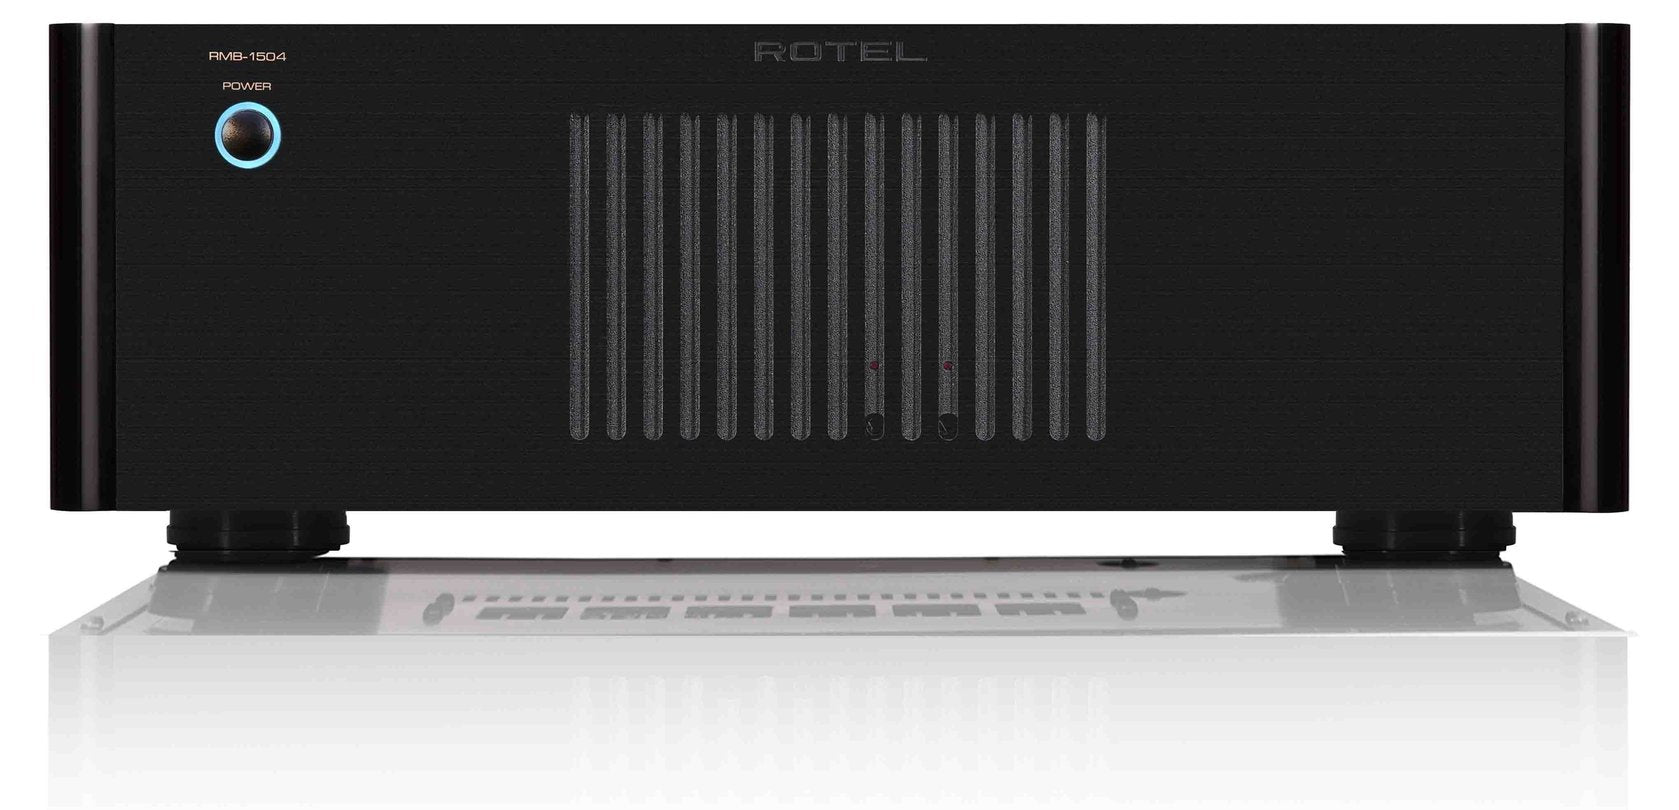 Rotel RMB-1504 multi-channel power amplifier